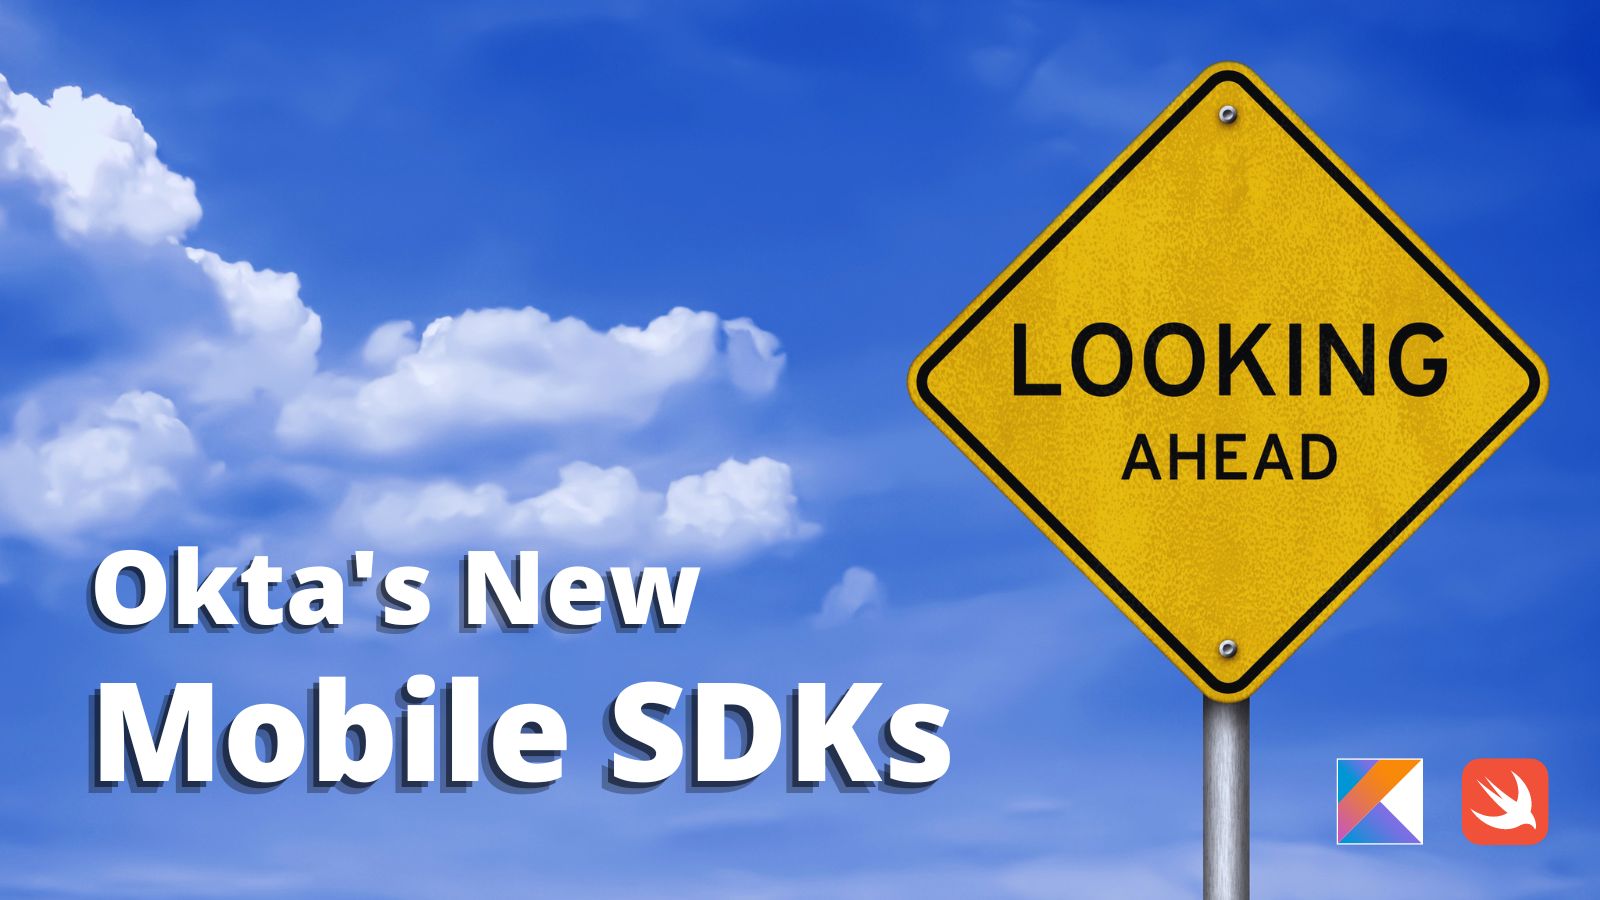 Introducing the New Okta Mobile SDKs